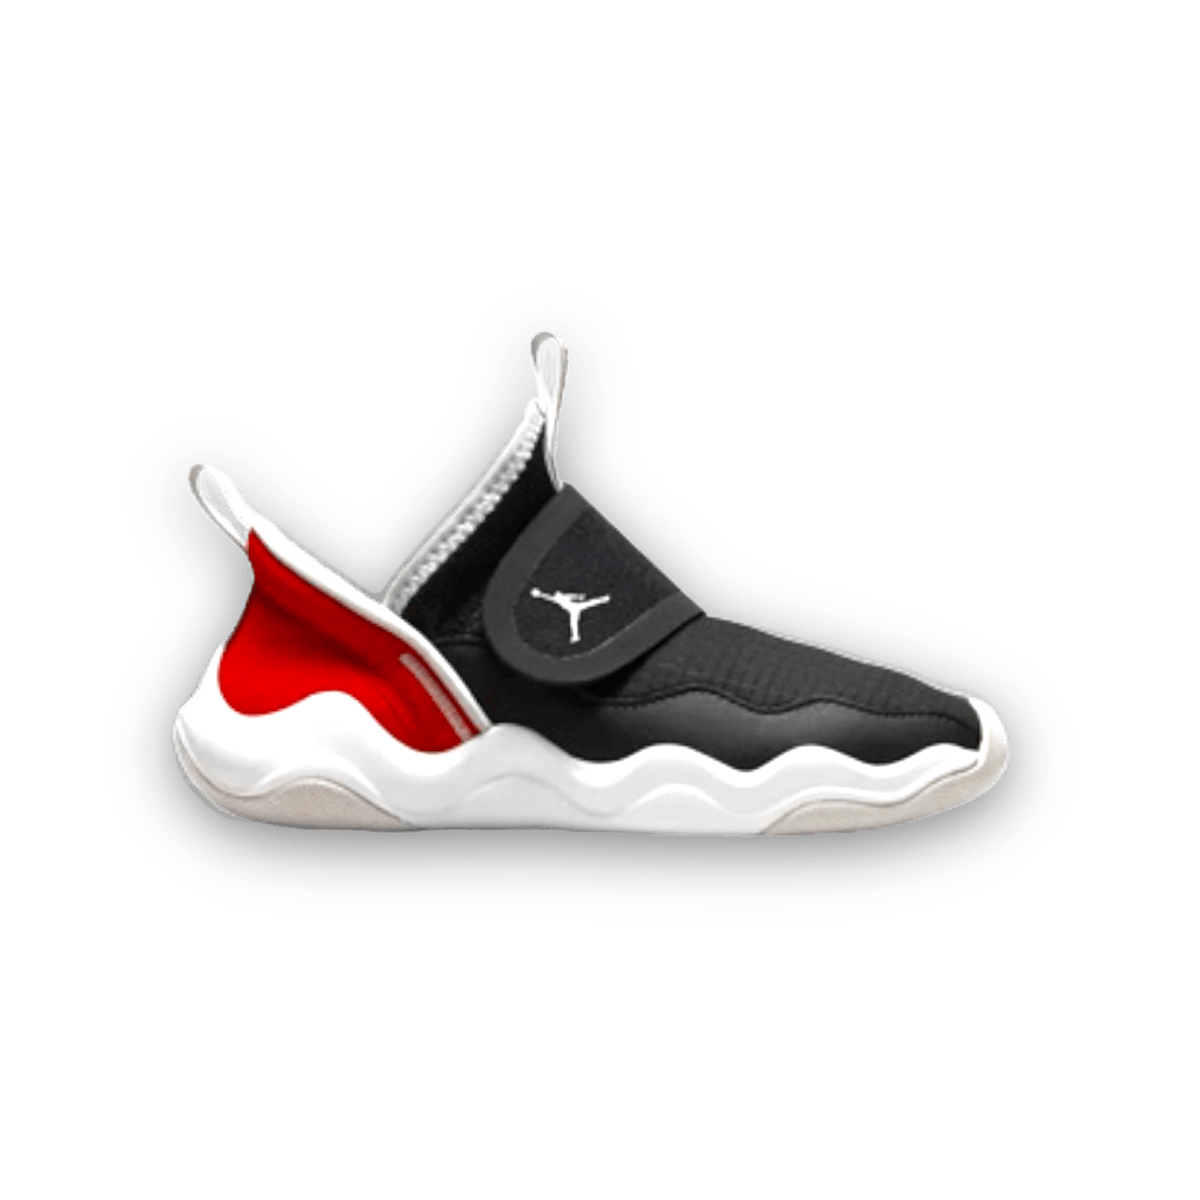 Jordan 23/7 Black and Red - Toddler - Low Sneaker - Jawns on Fire Sneakers & Streetwear